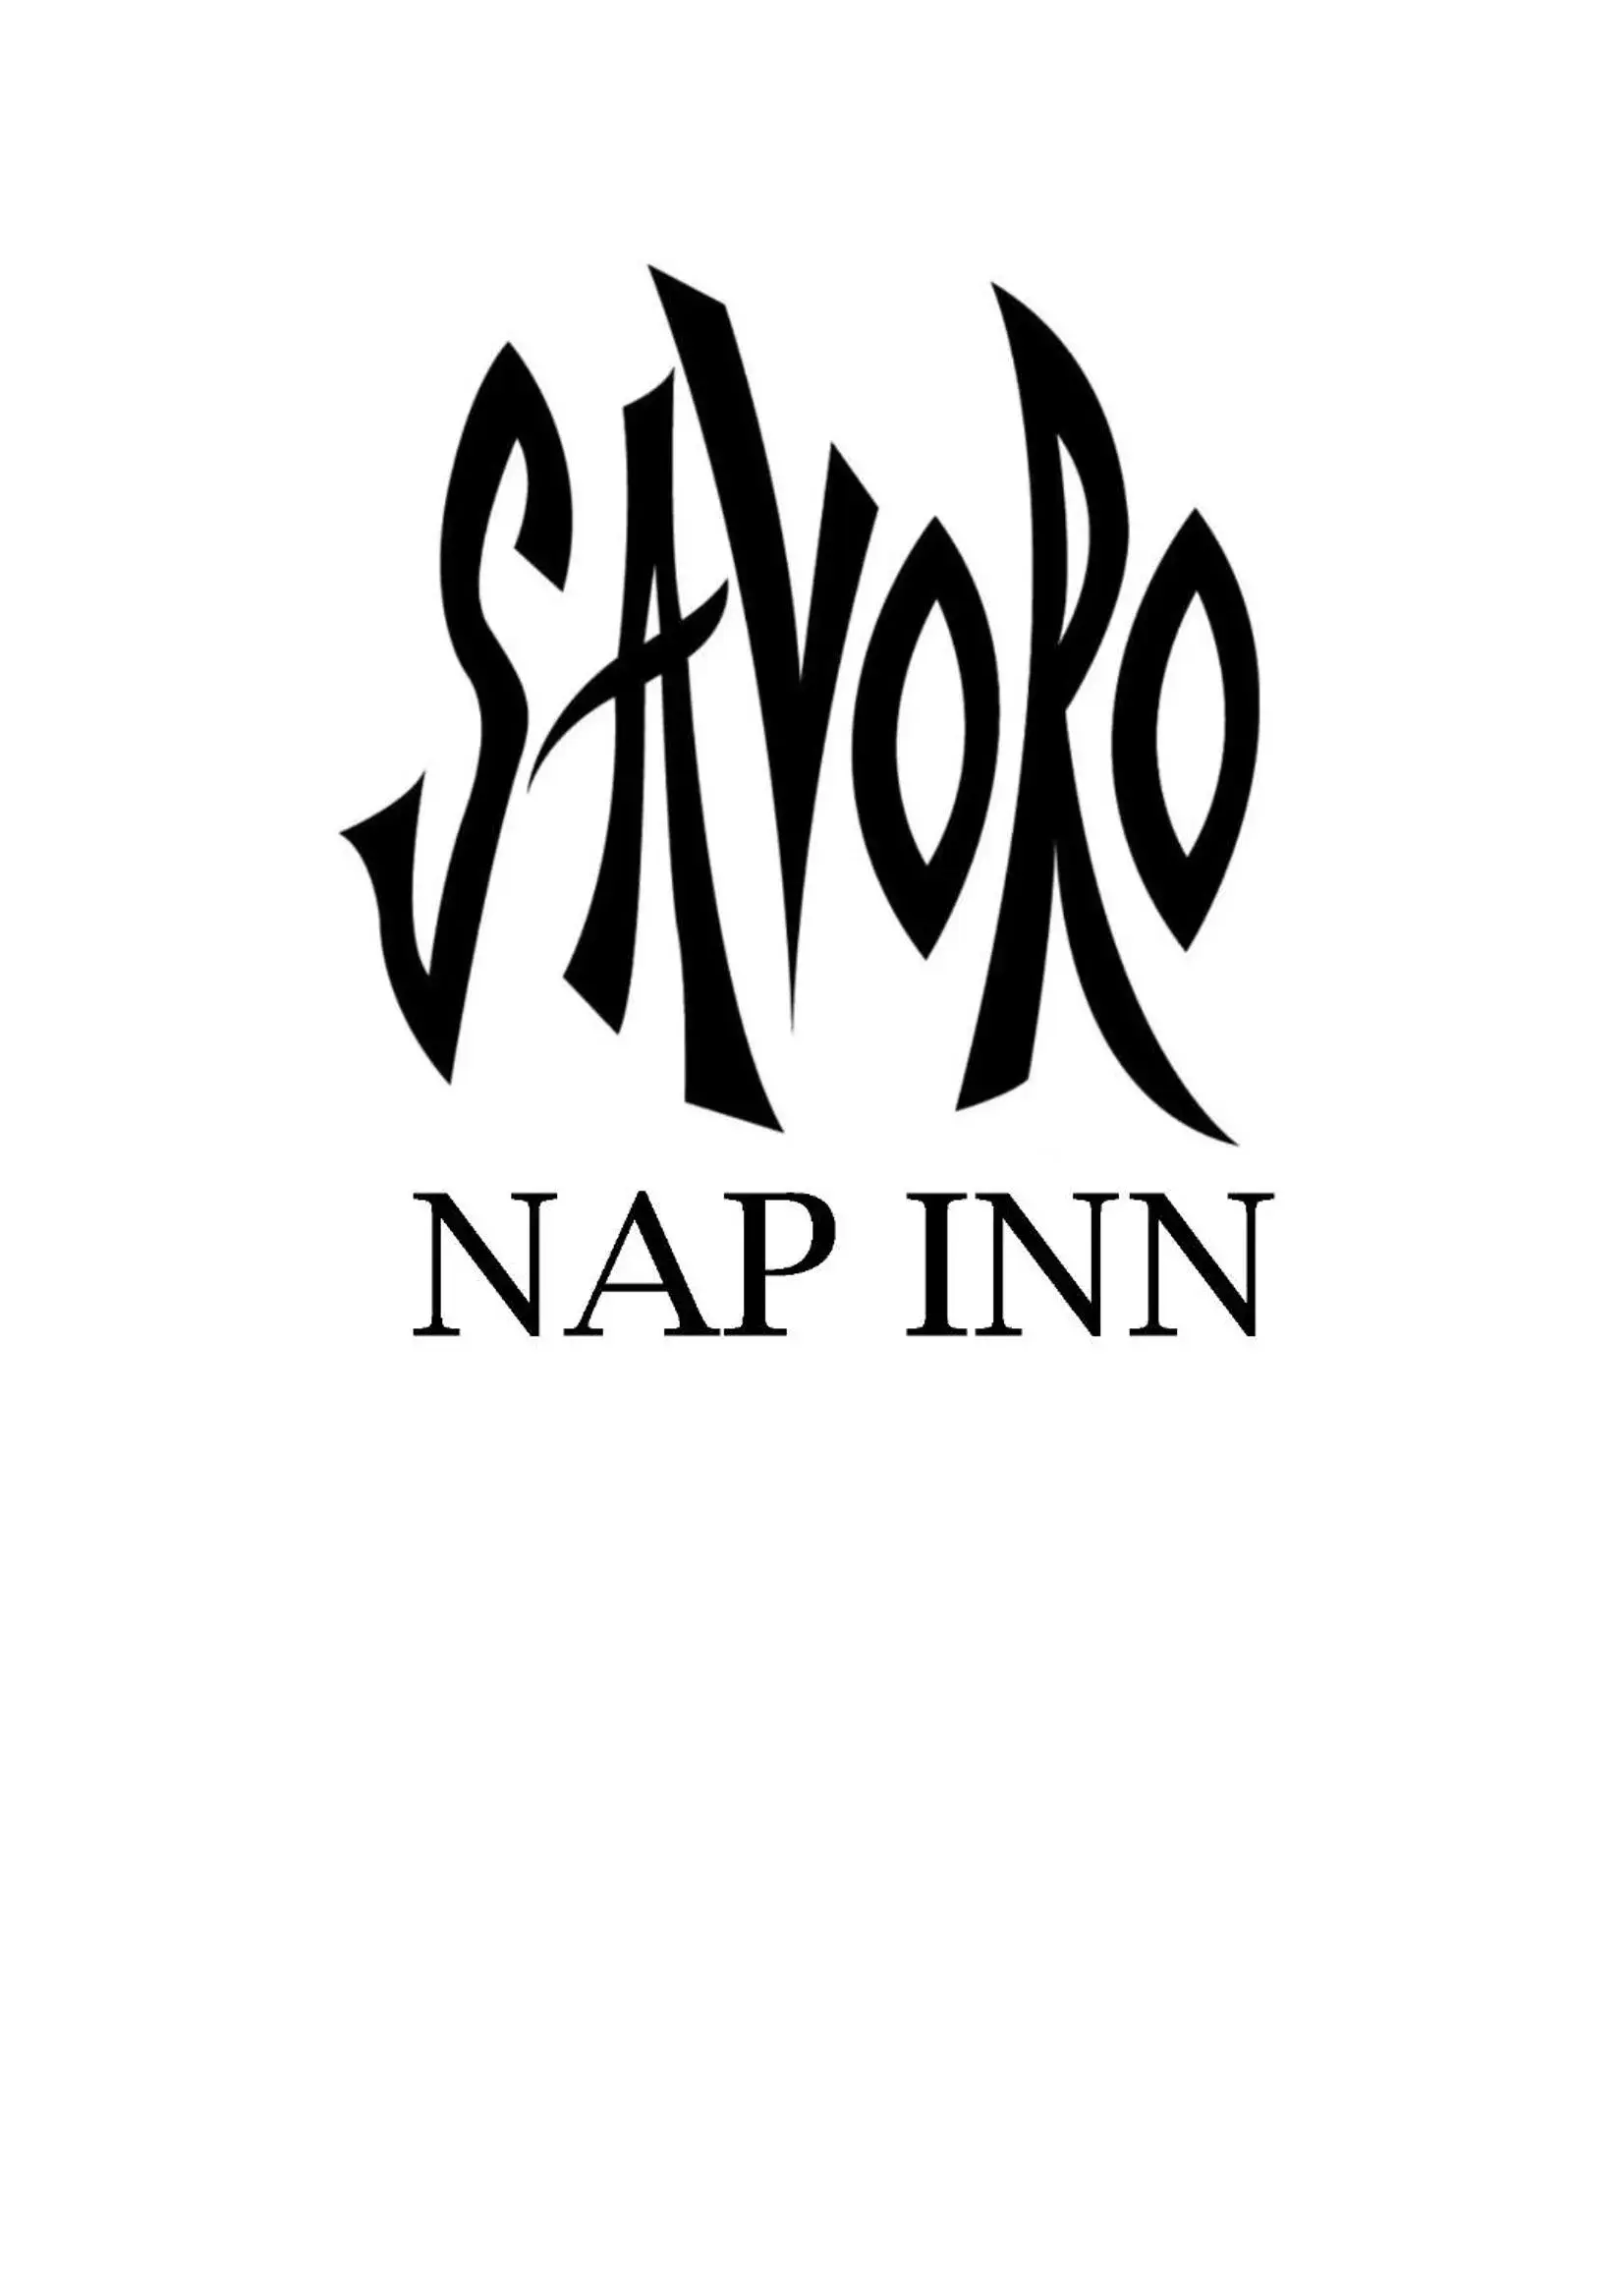 Property logo or sign in Nap Inn Savoro